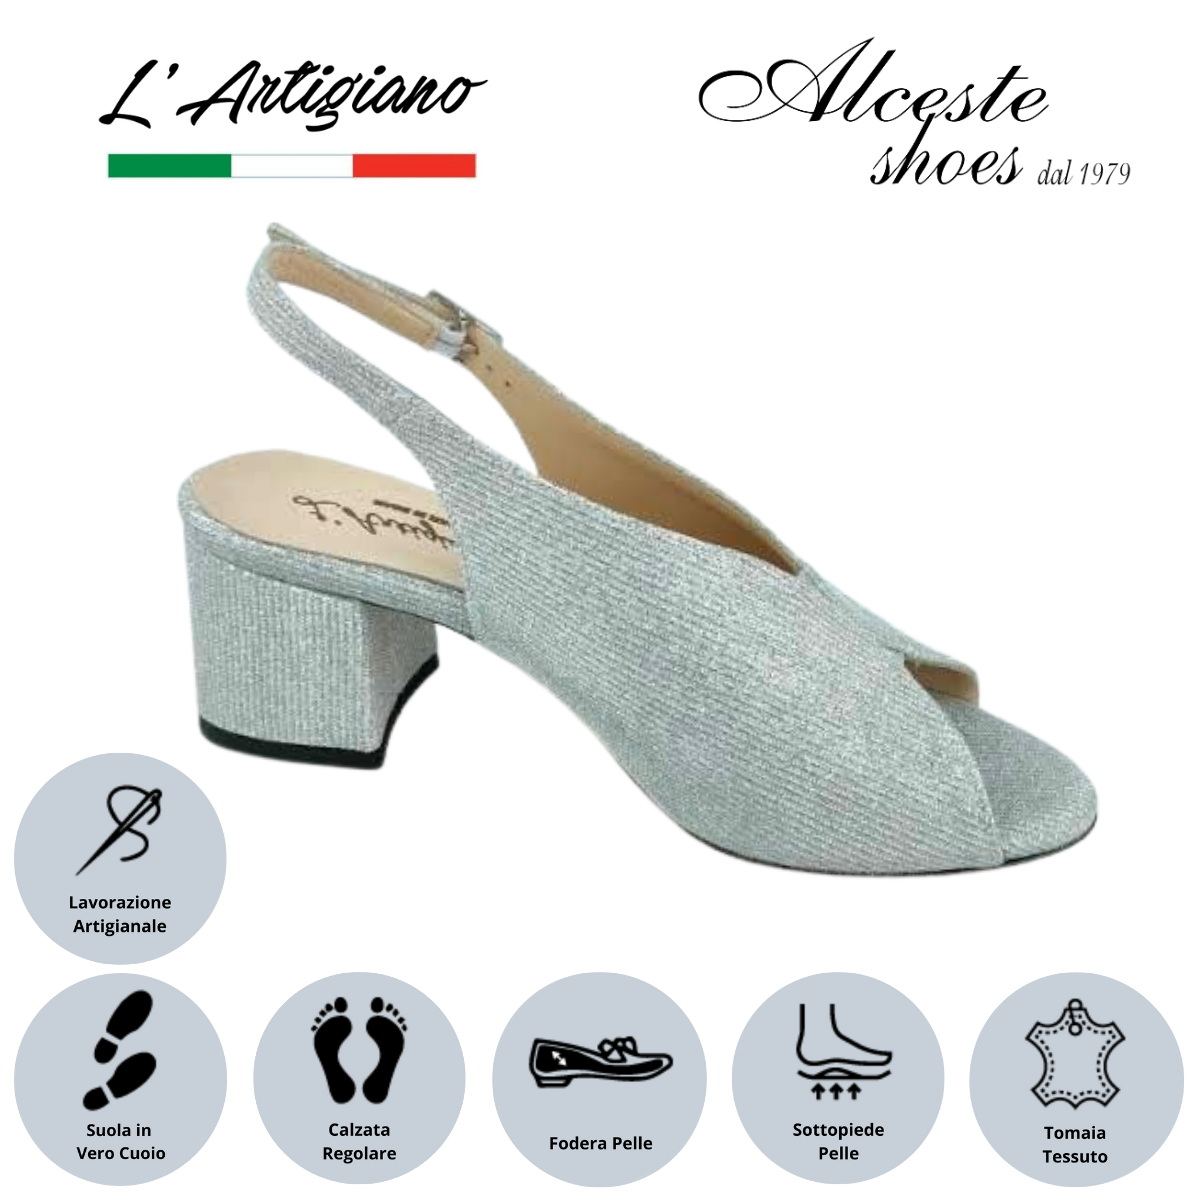 Sandalo Donna "L'Artigiano" Art. 125 Tessuto Lurex Argento Alceste Shoes 3 1 2